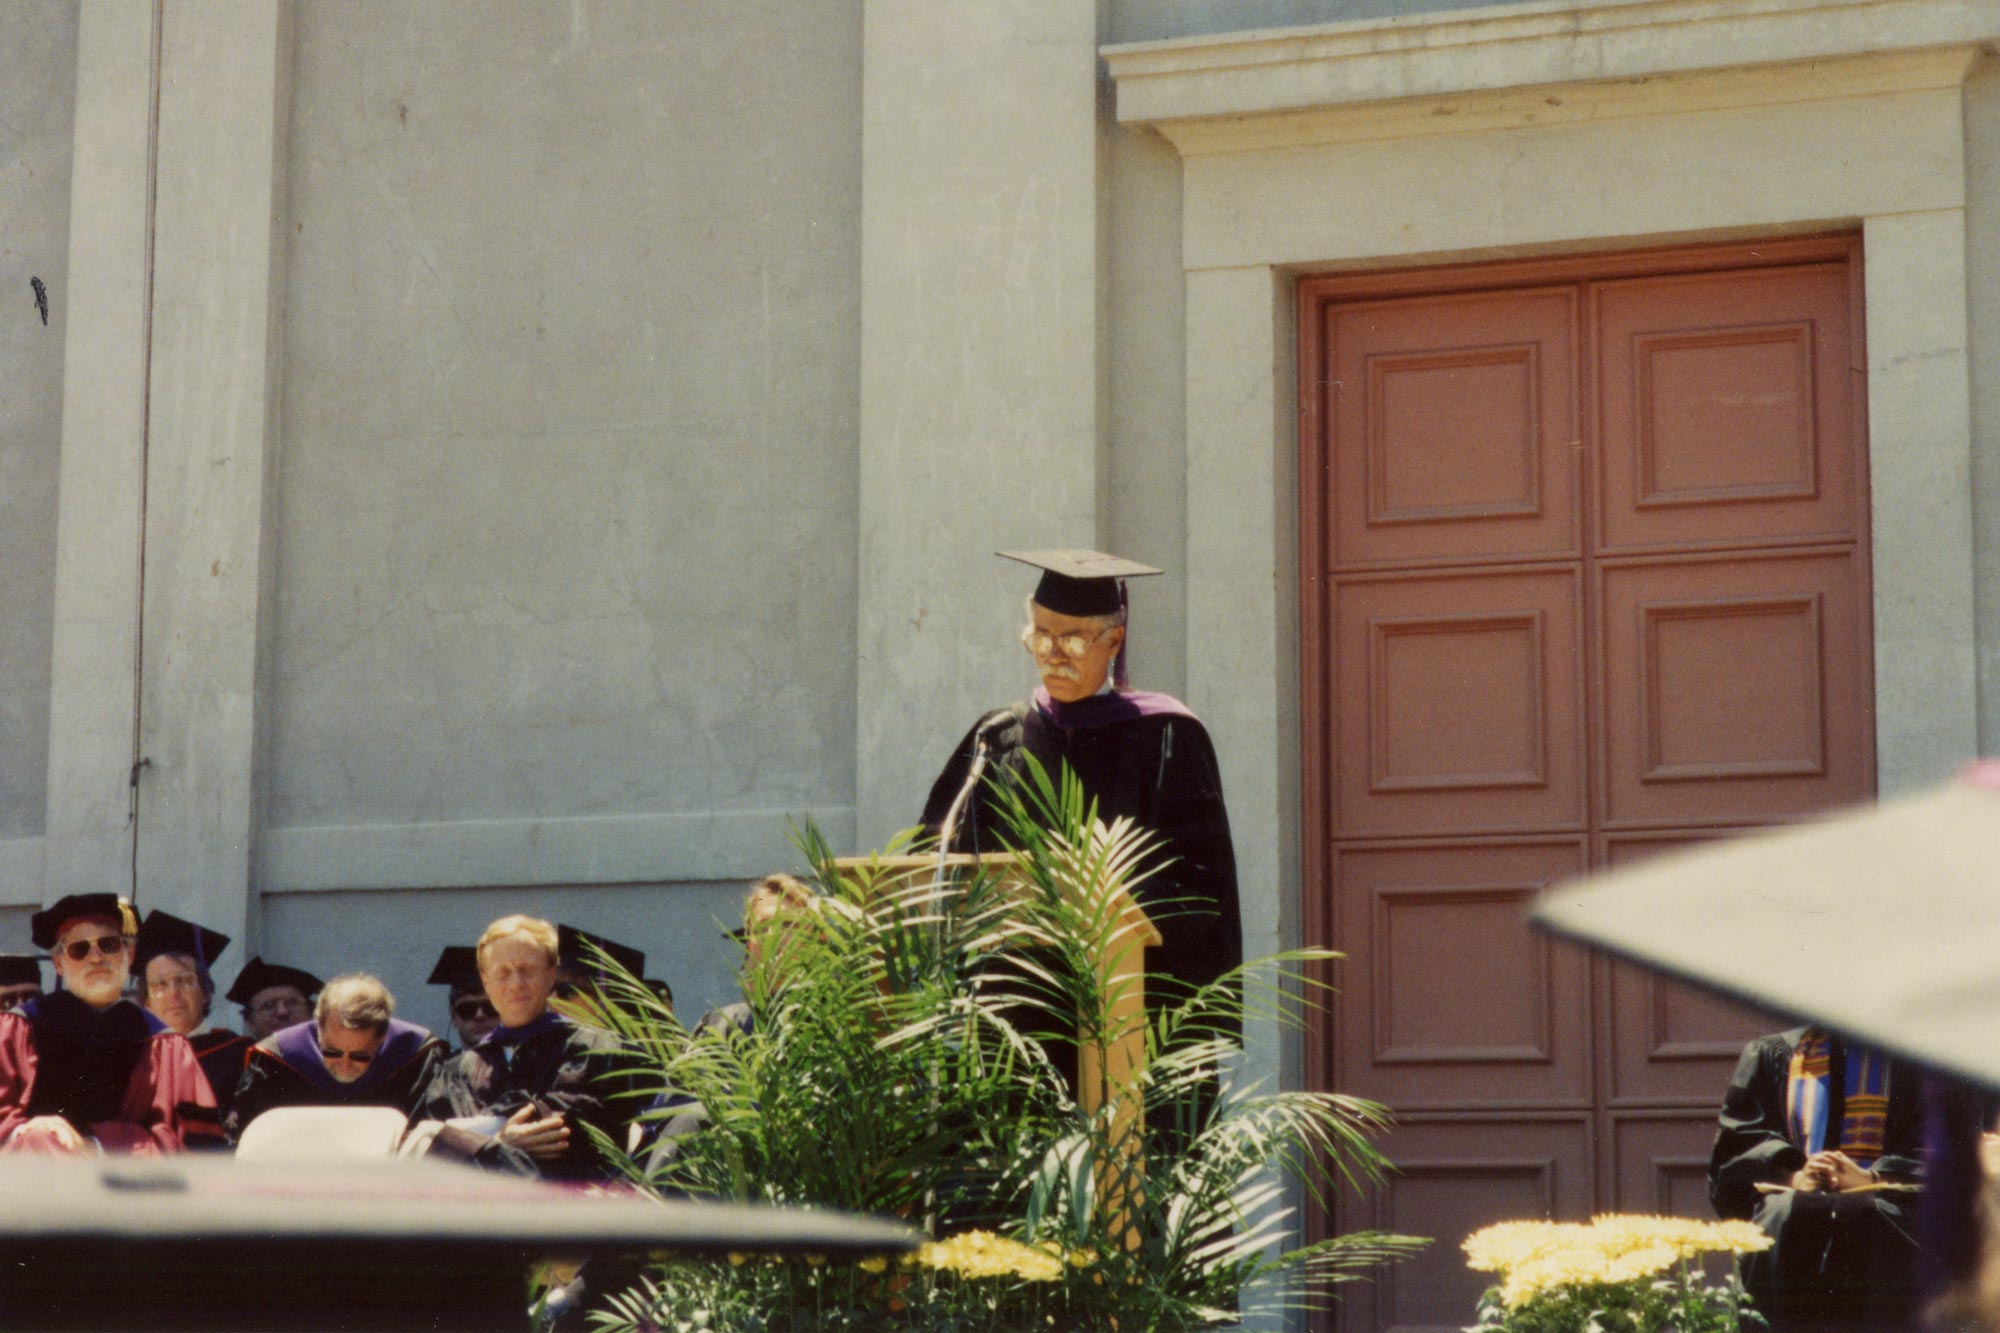 Merchant standing at the podium at graduation giving a speech